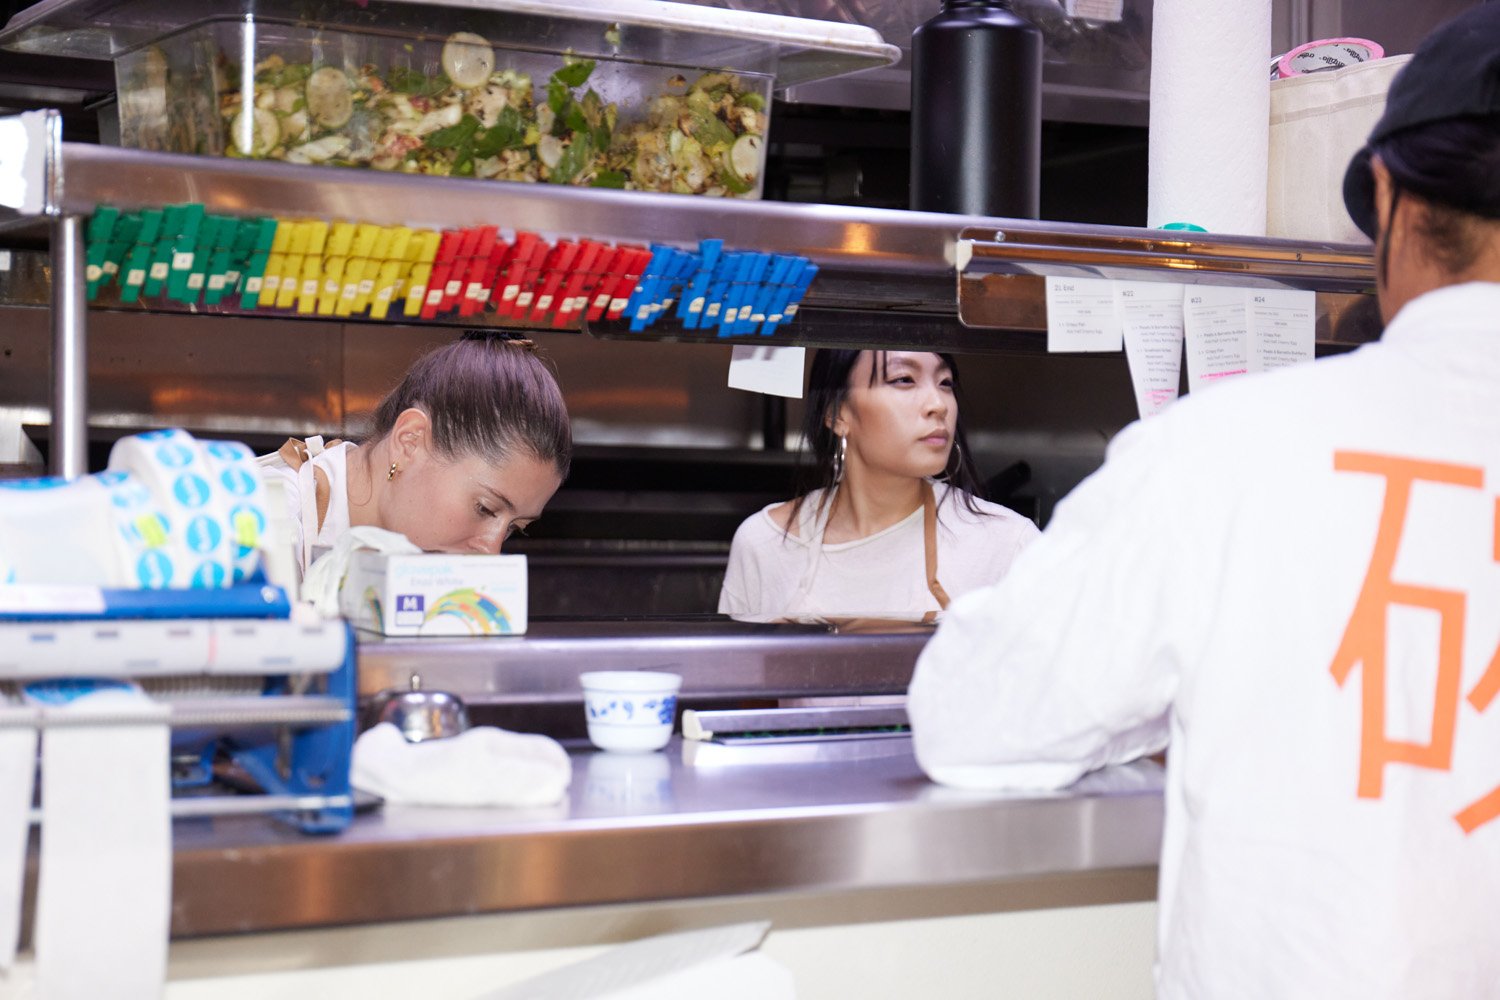 People working in a restaurant kitchen